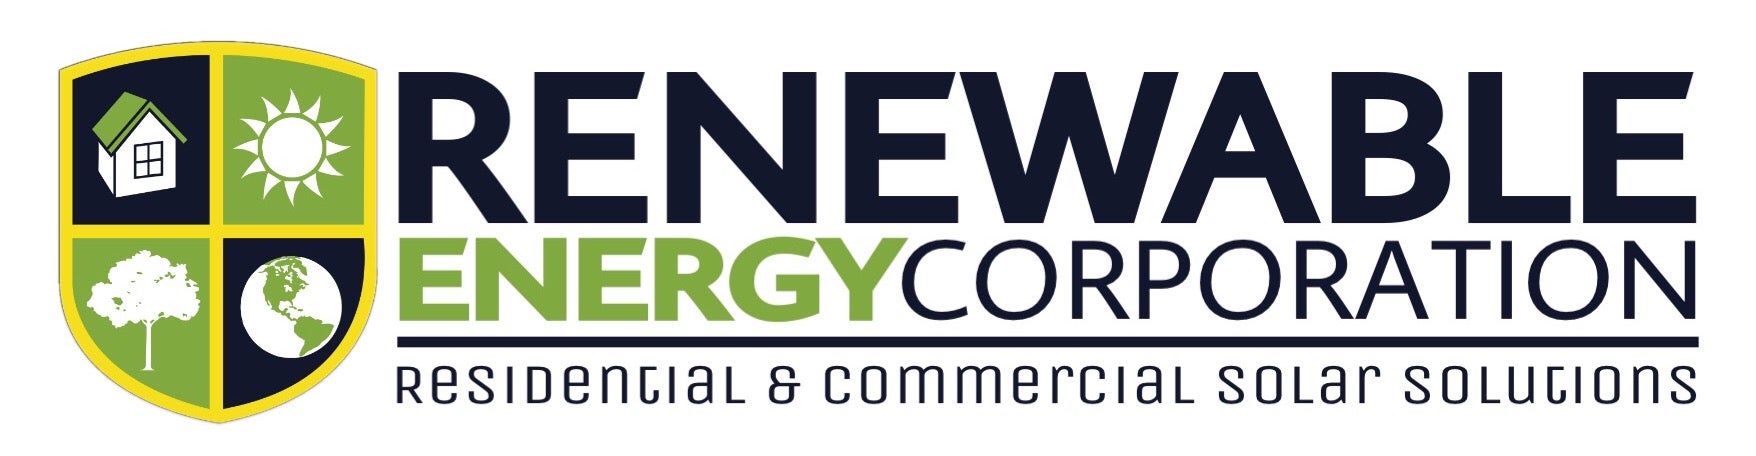 Renewable Energy Corporation logo